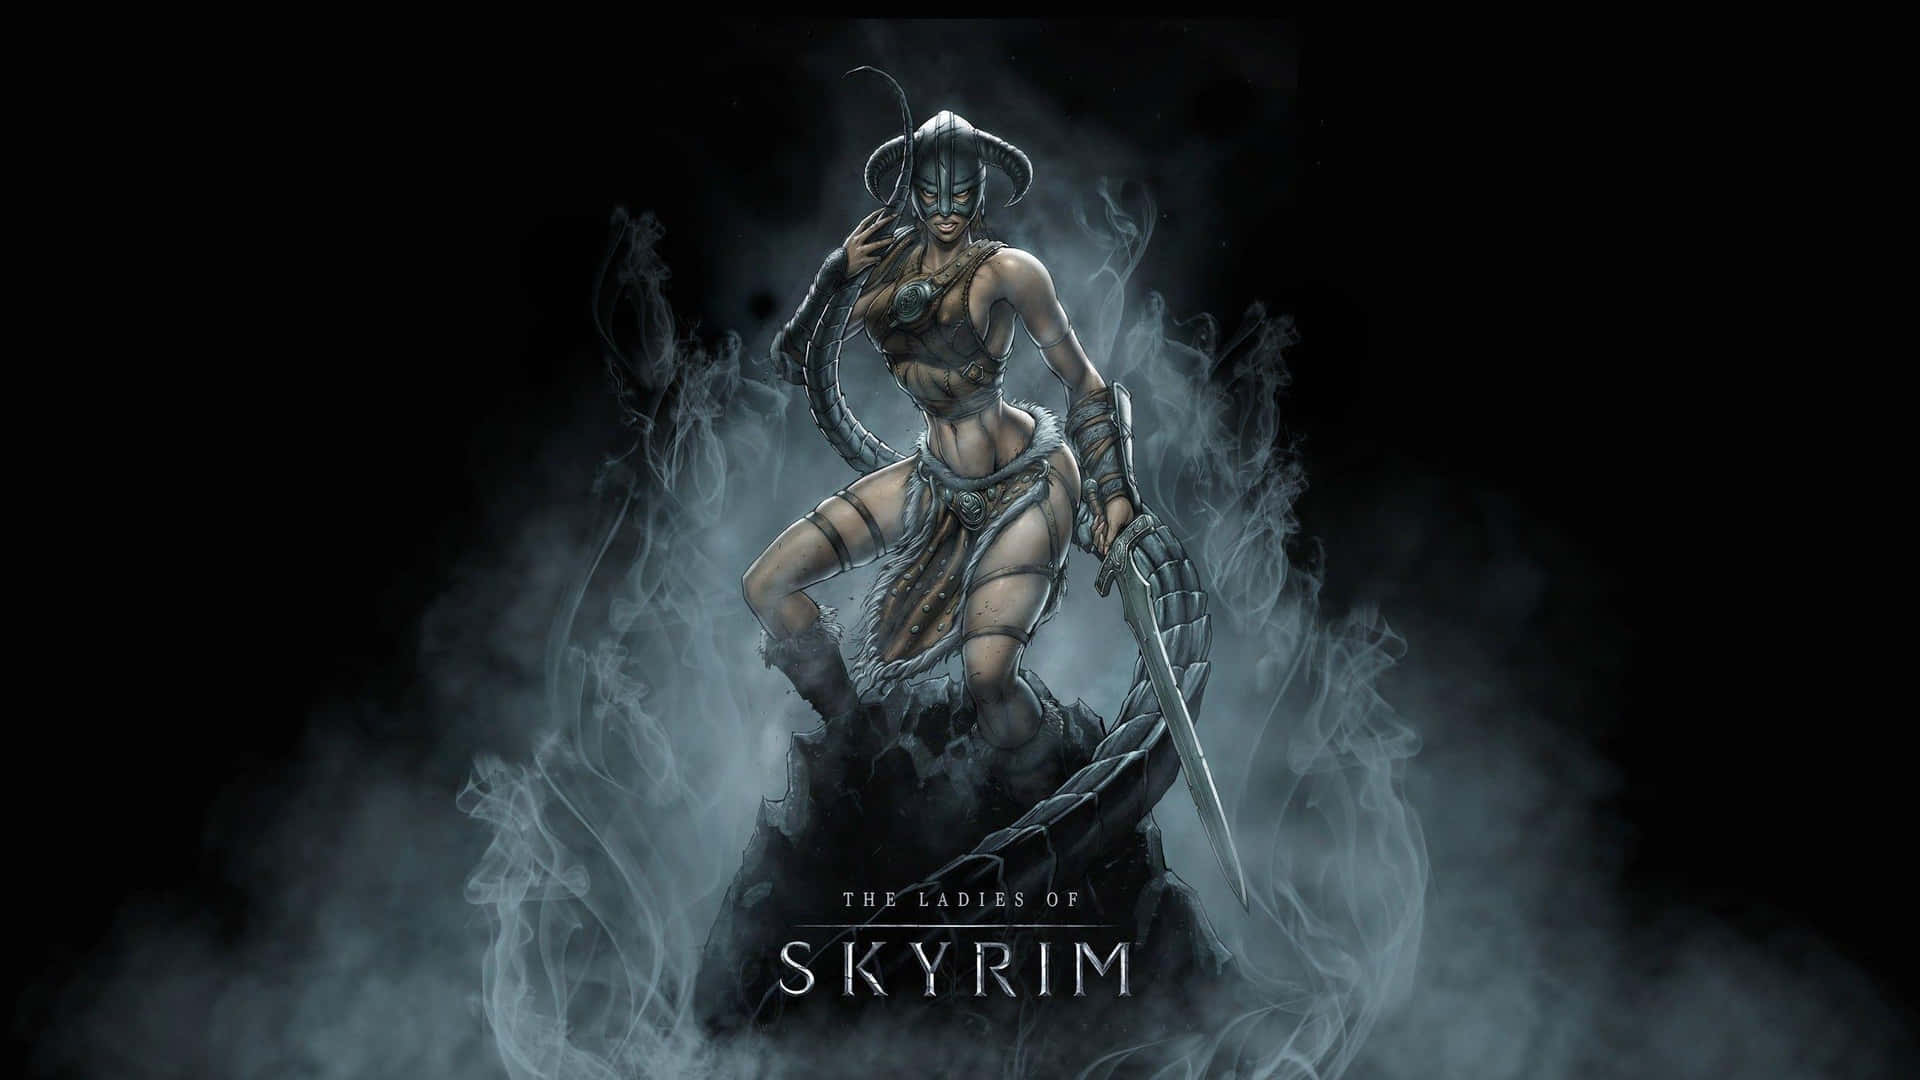 The Dragonborn Warrior in The Elder Scrolls V: Skyrim